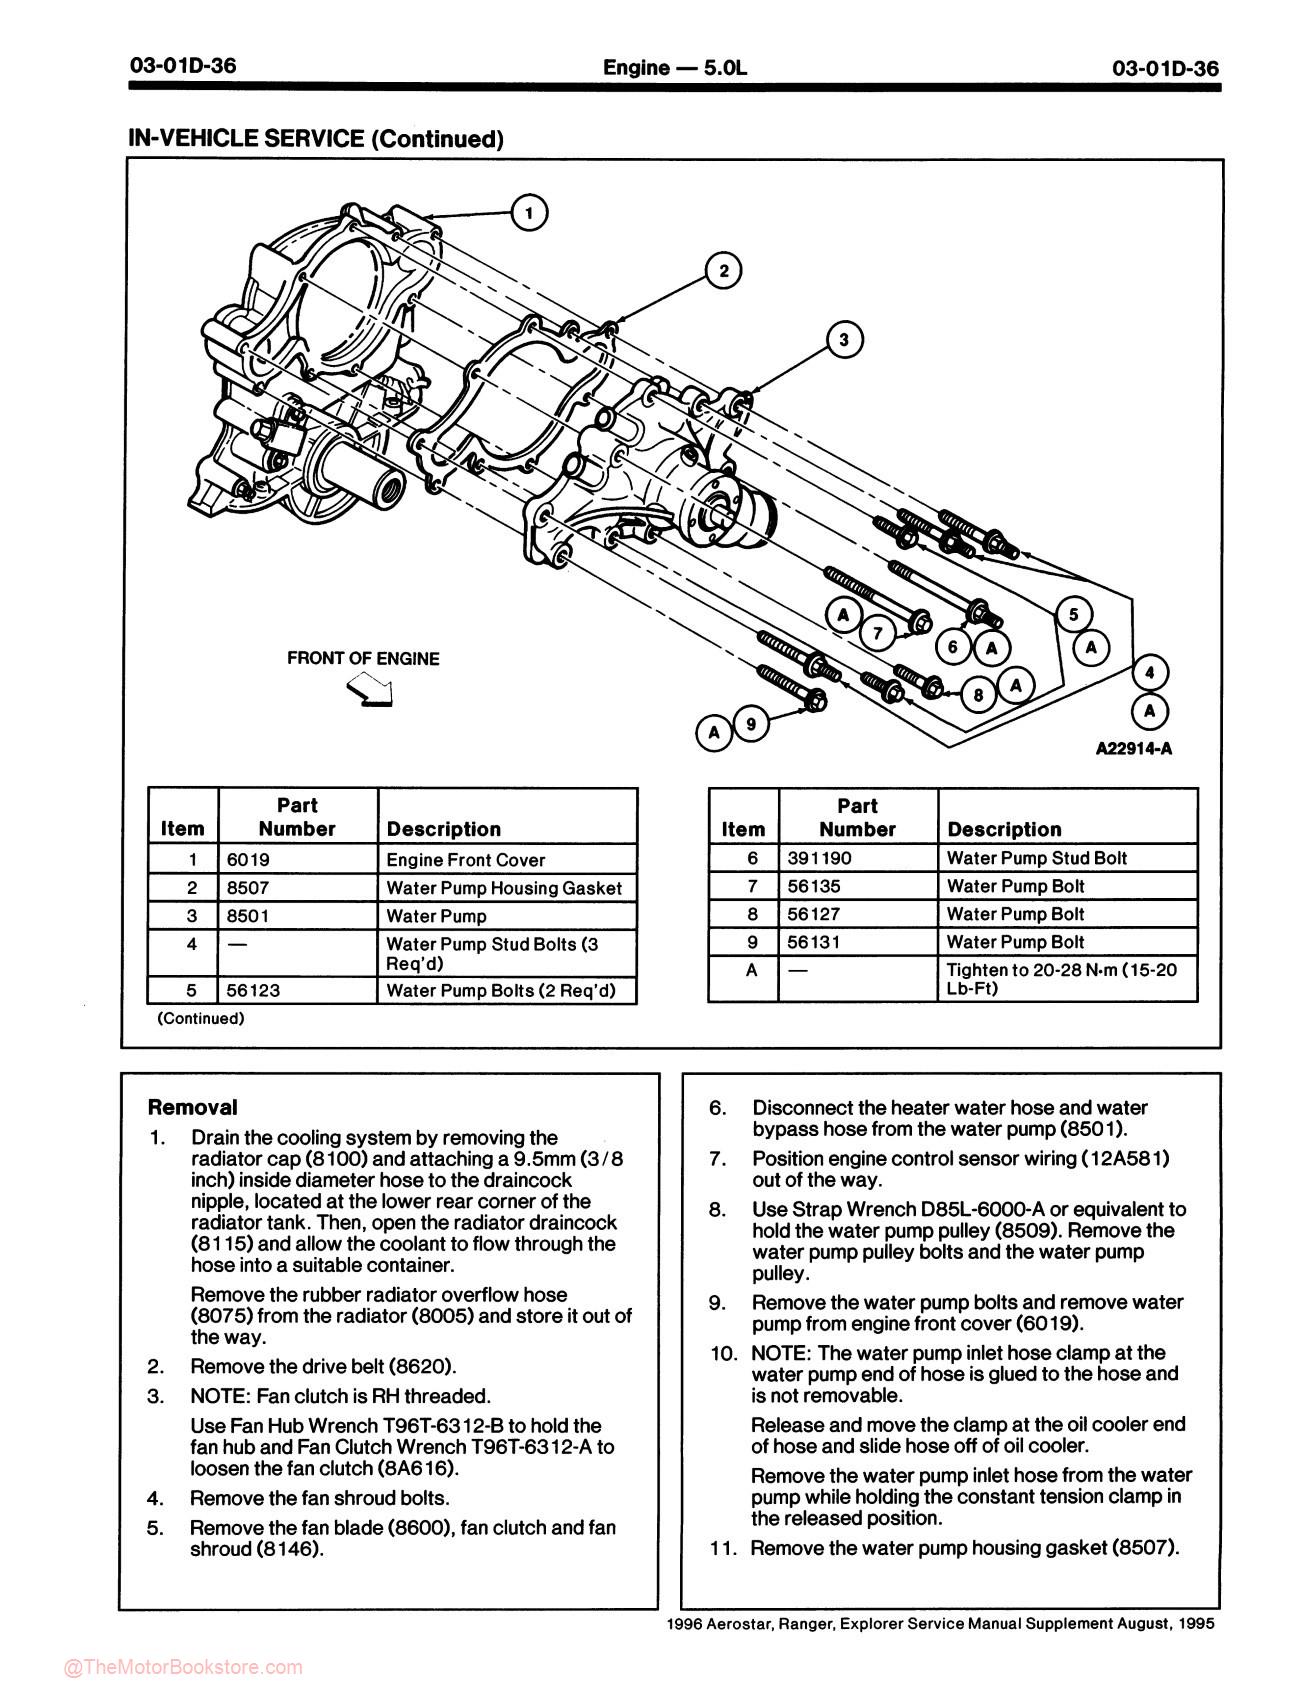 1996 Ford Ranger, Aerostar, Explorer Service Manual - Sample Page 1